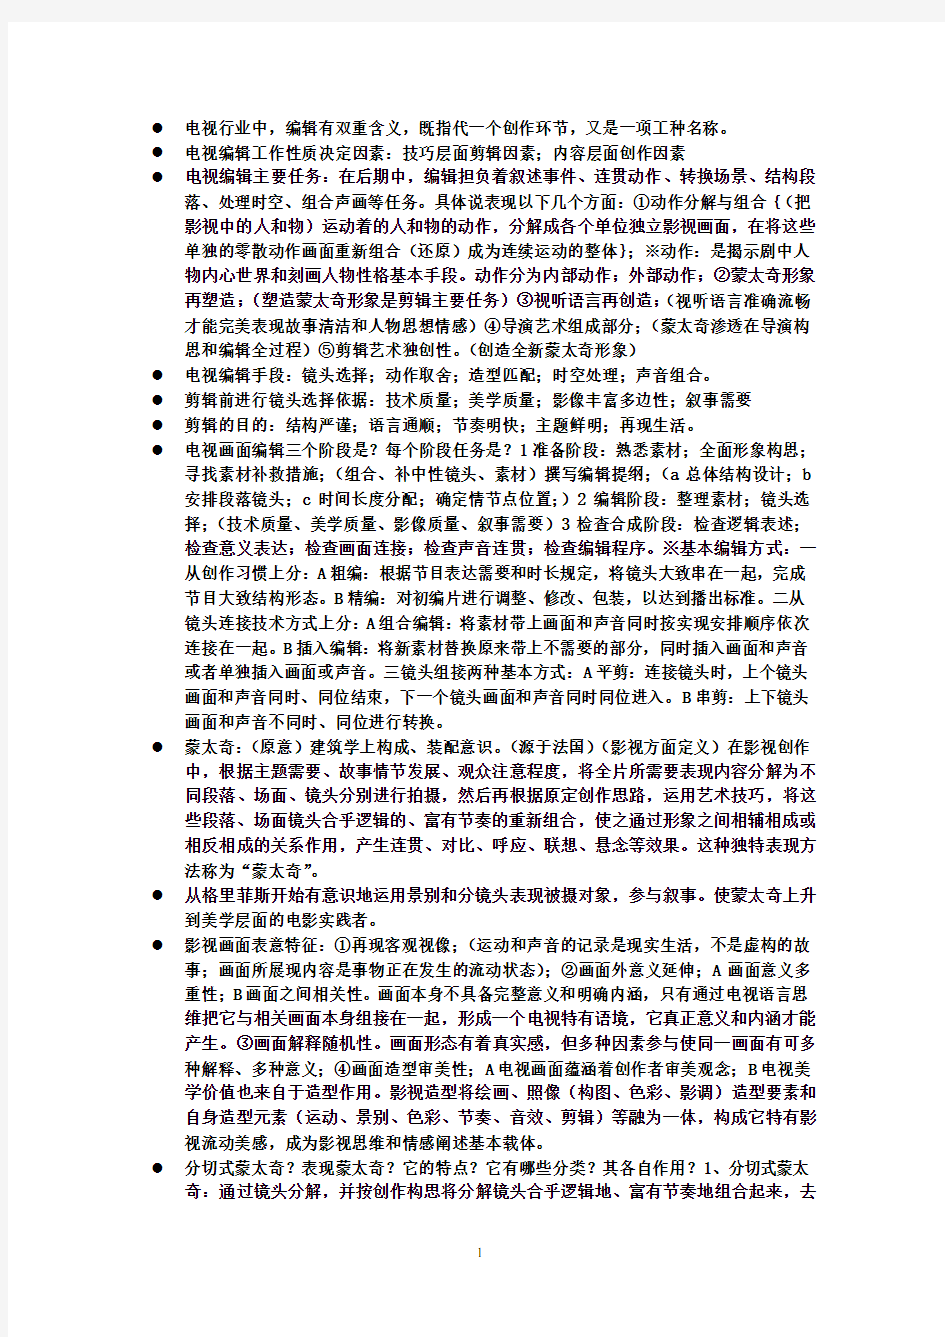 电视画面编辑复习资料(3).pdf